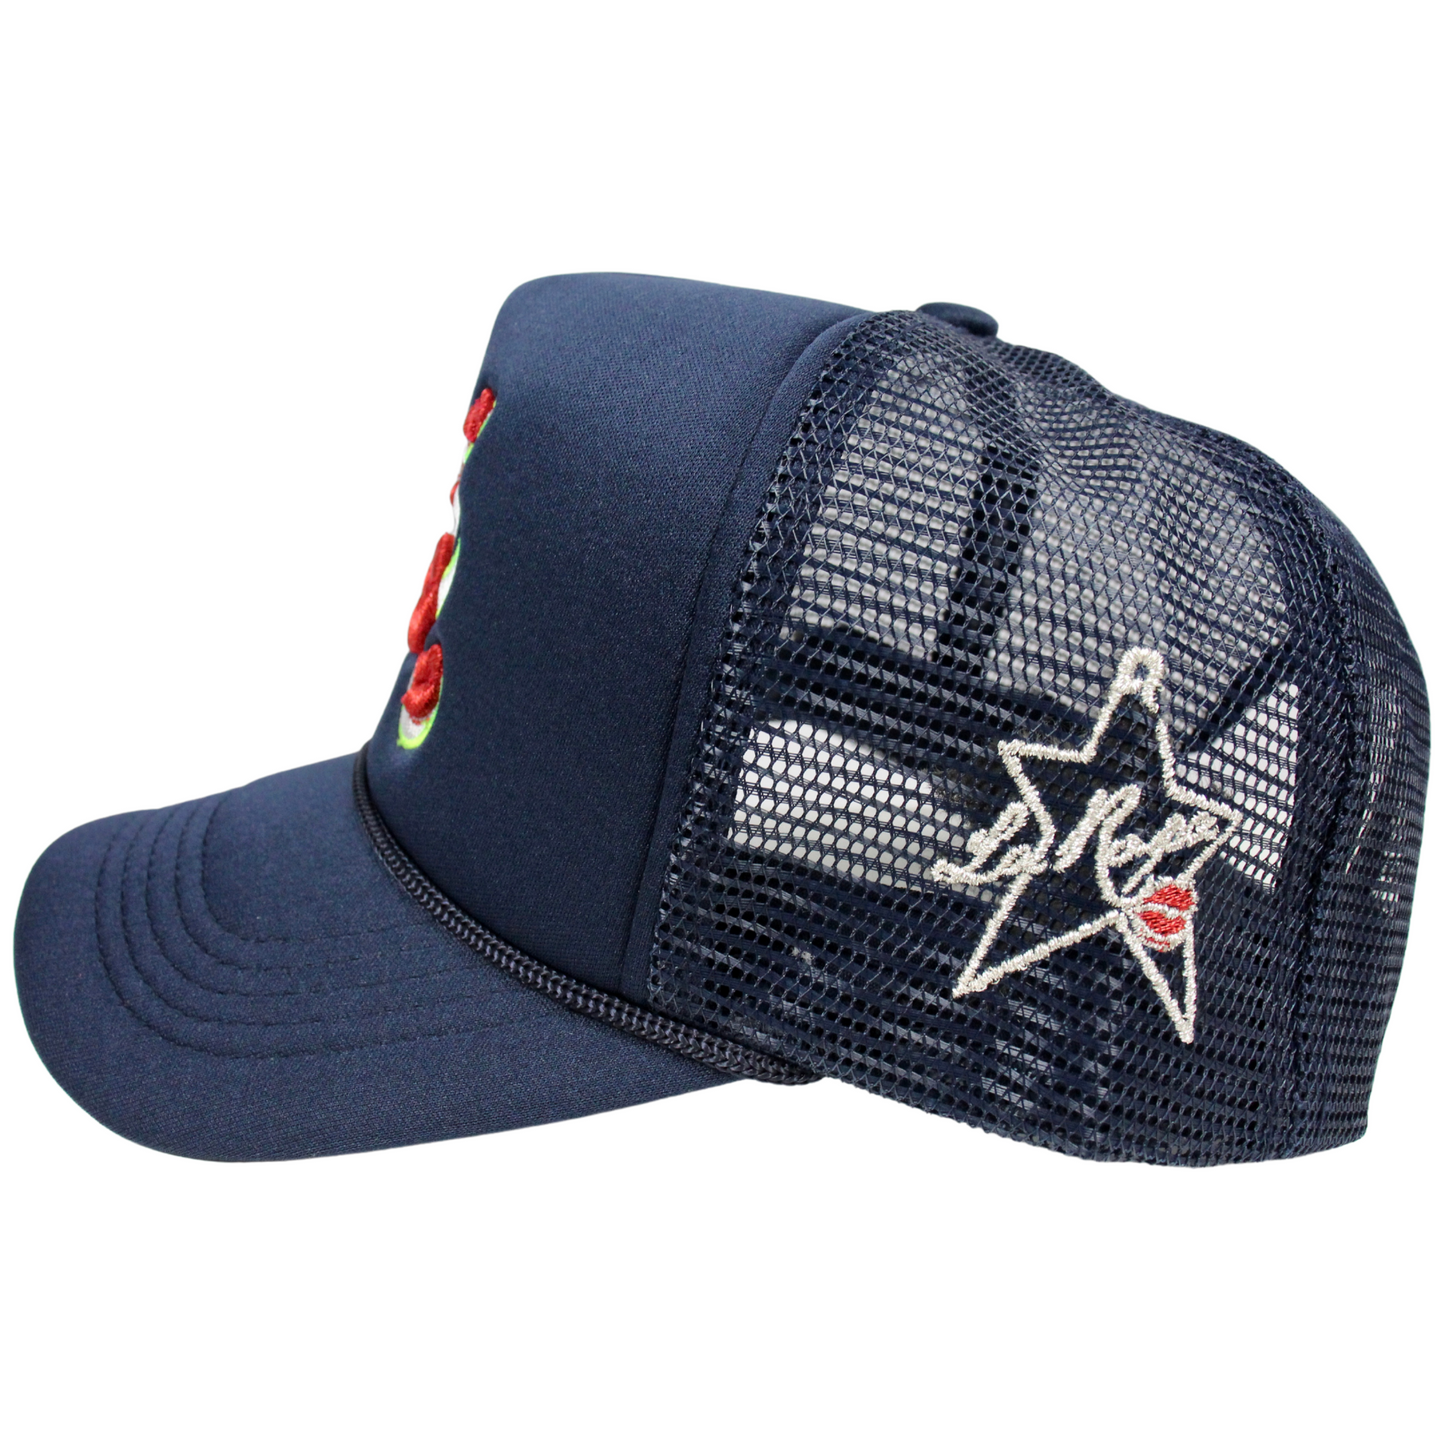 La Ropa Atlanta Trucker Hat (Navy)